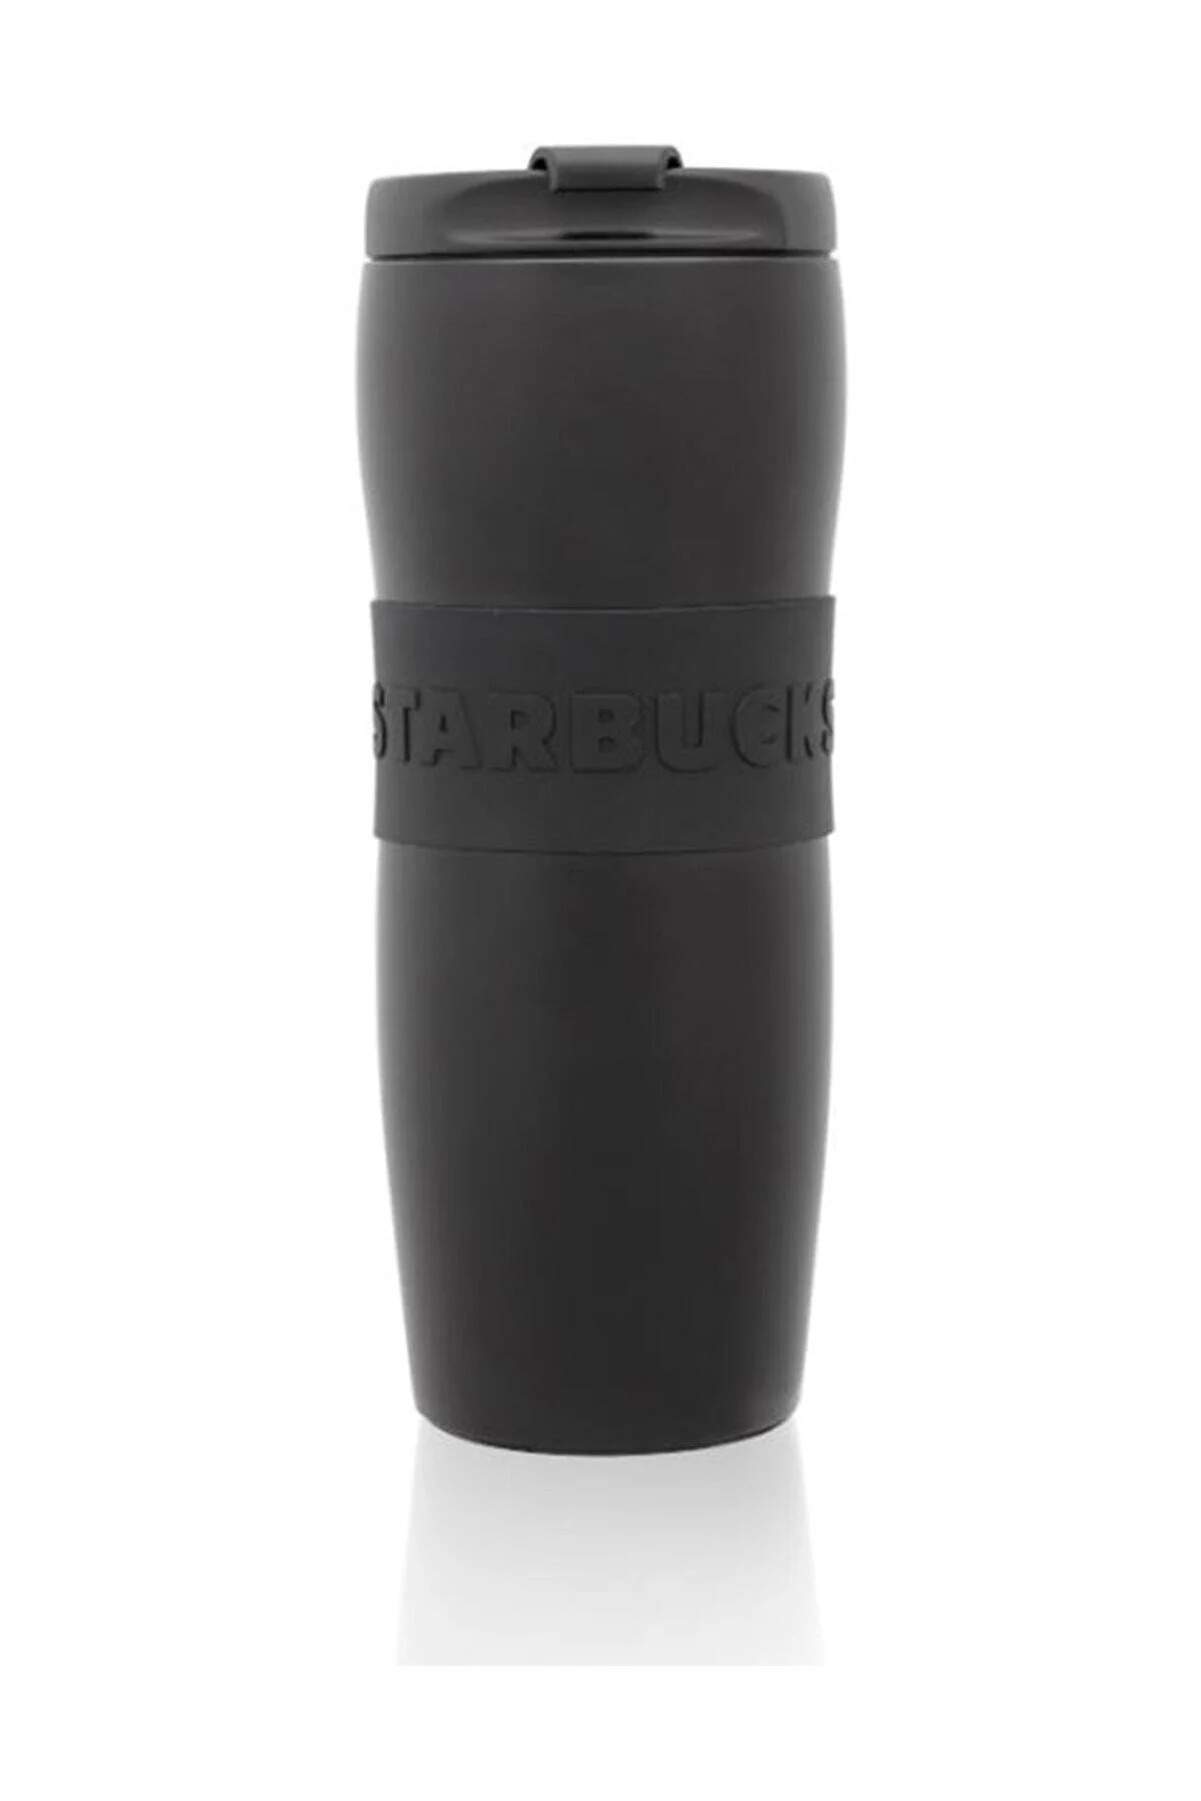 Starbucks Black Steel Cup Thermos 350 ml